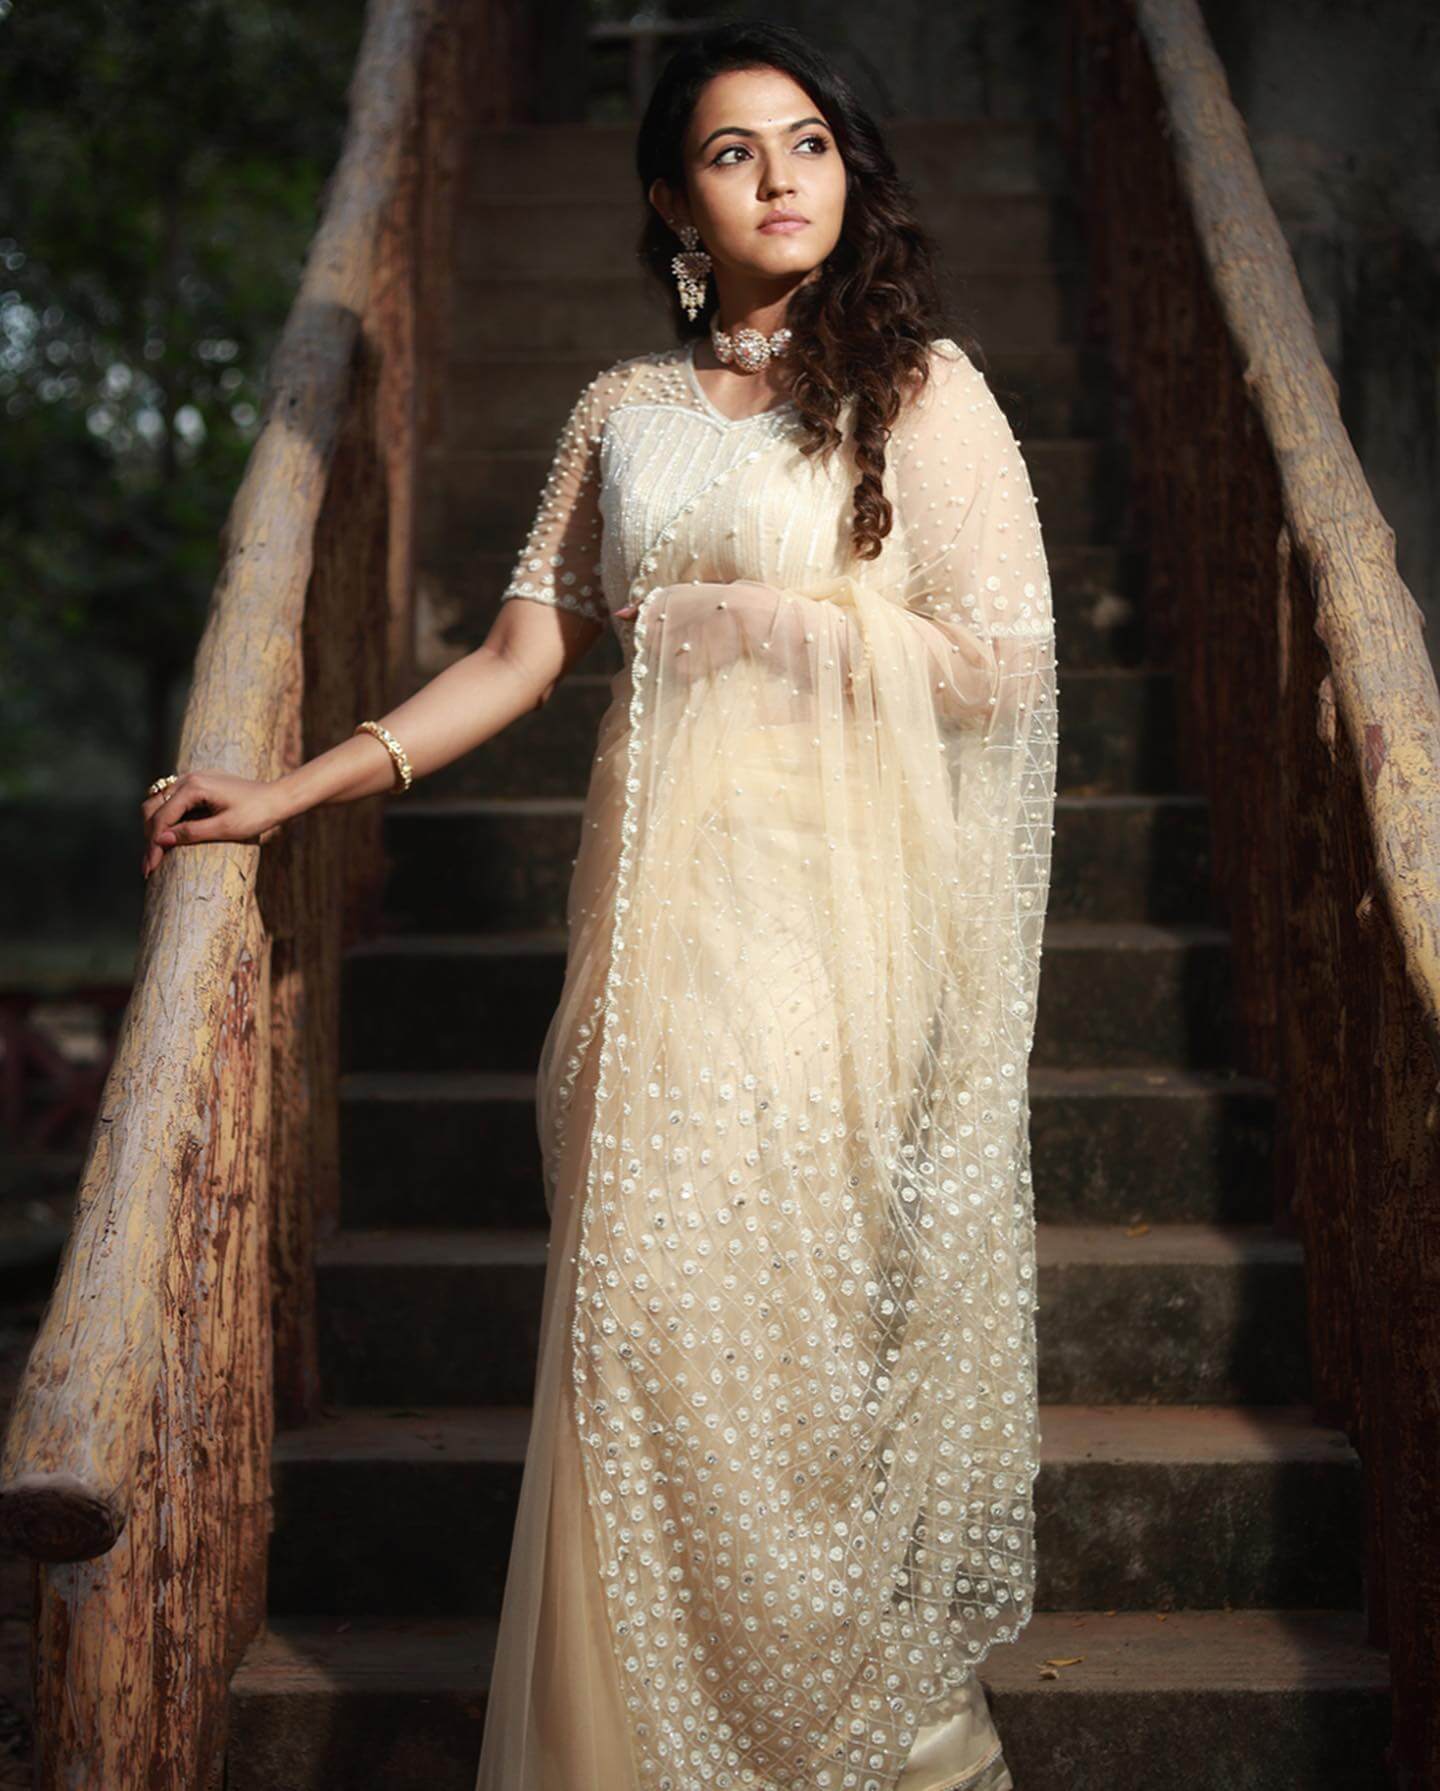 Aparna Das Dapper Look In Beige saree with Pearl Work Blouse